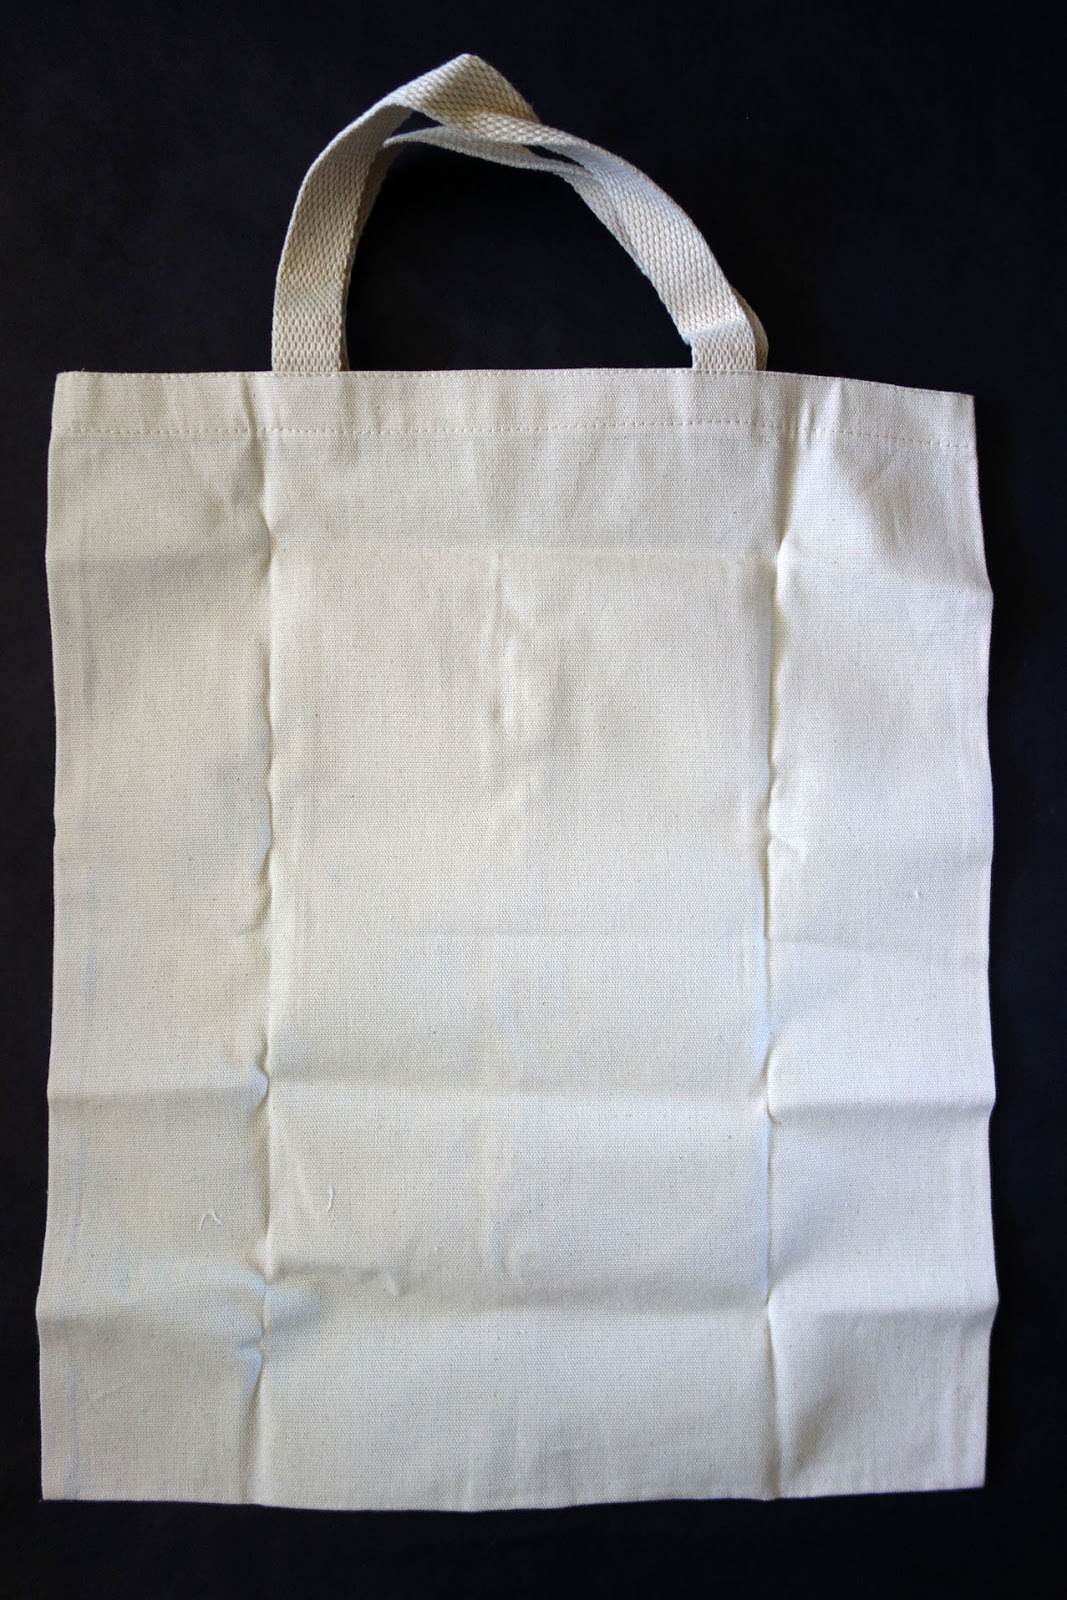 blah to TADA!: A Tote Bag Transformation